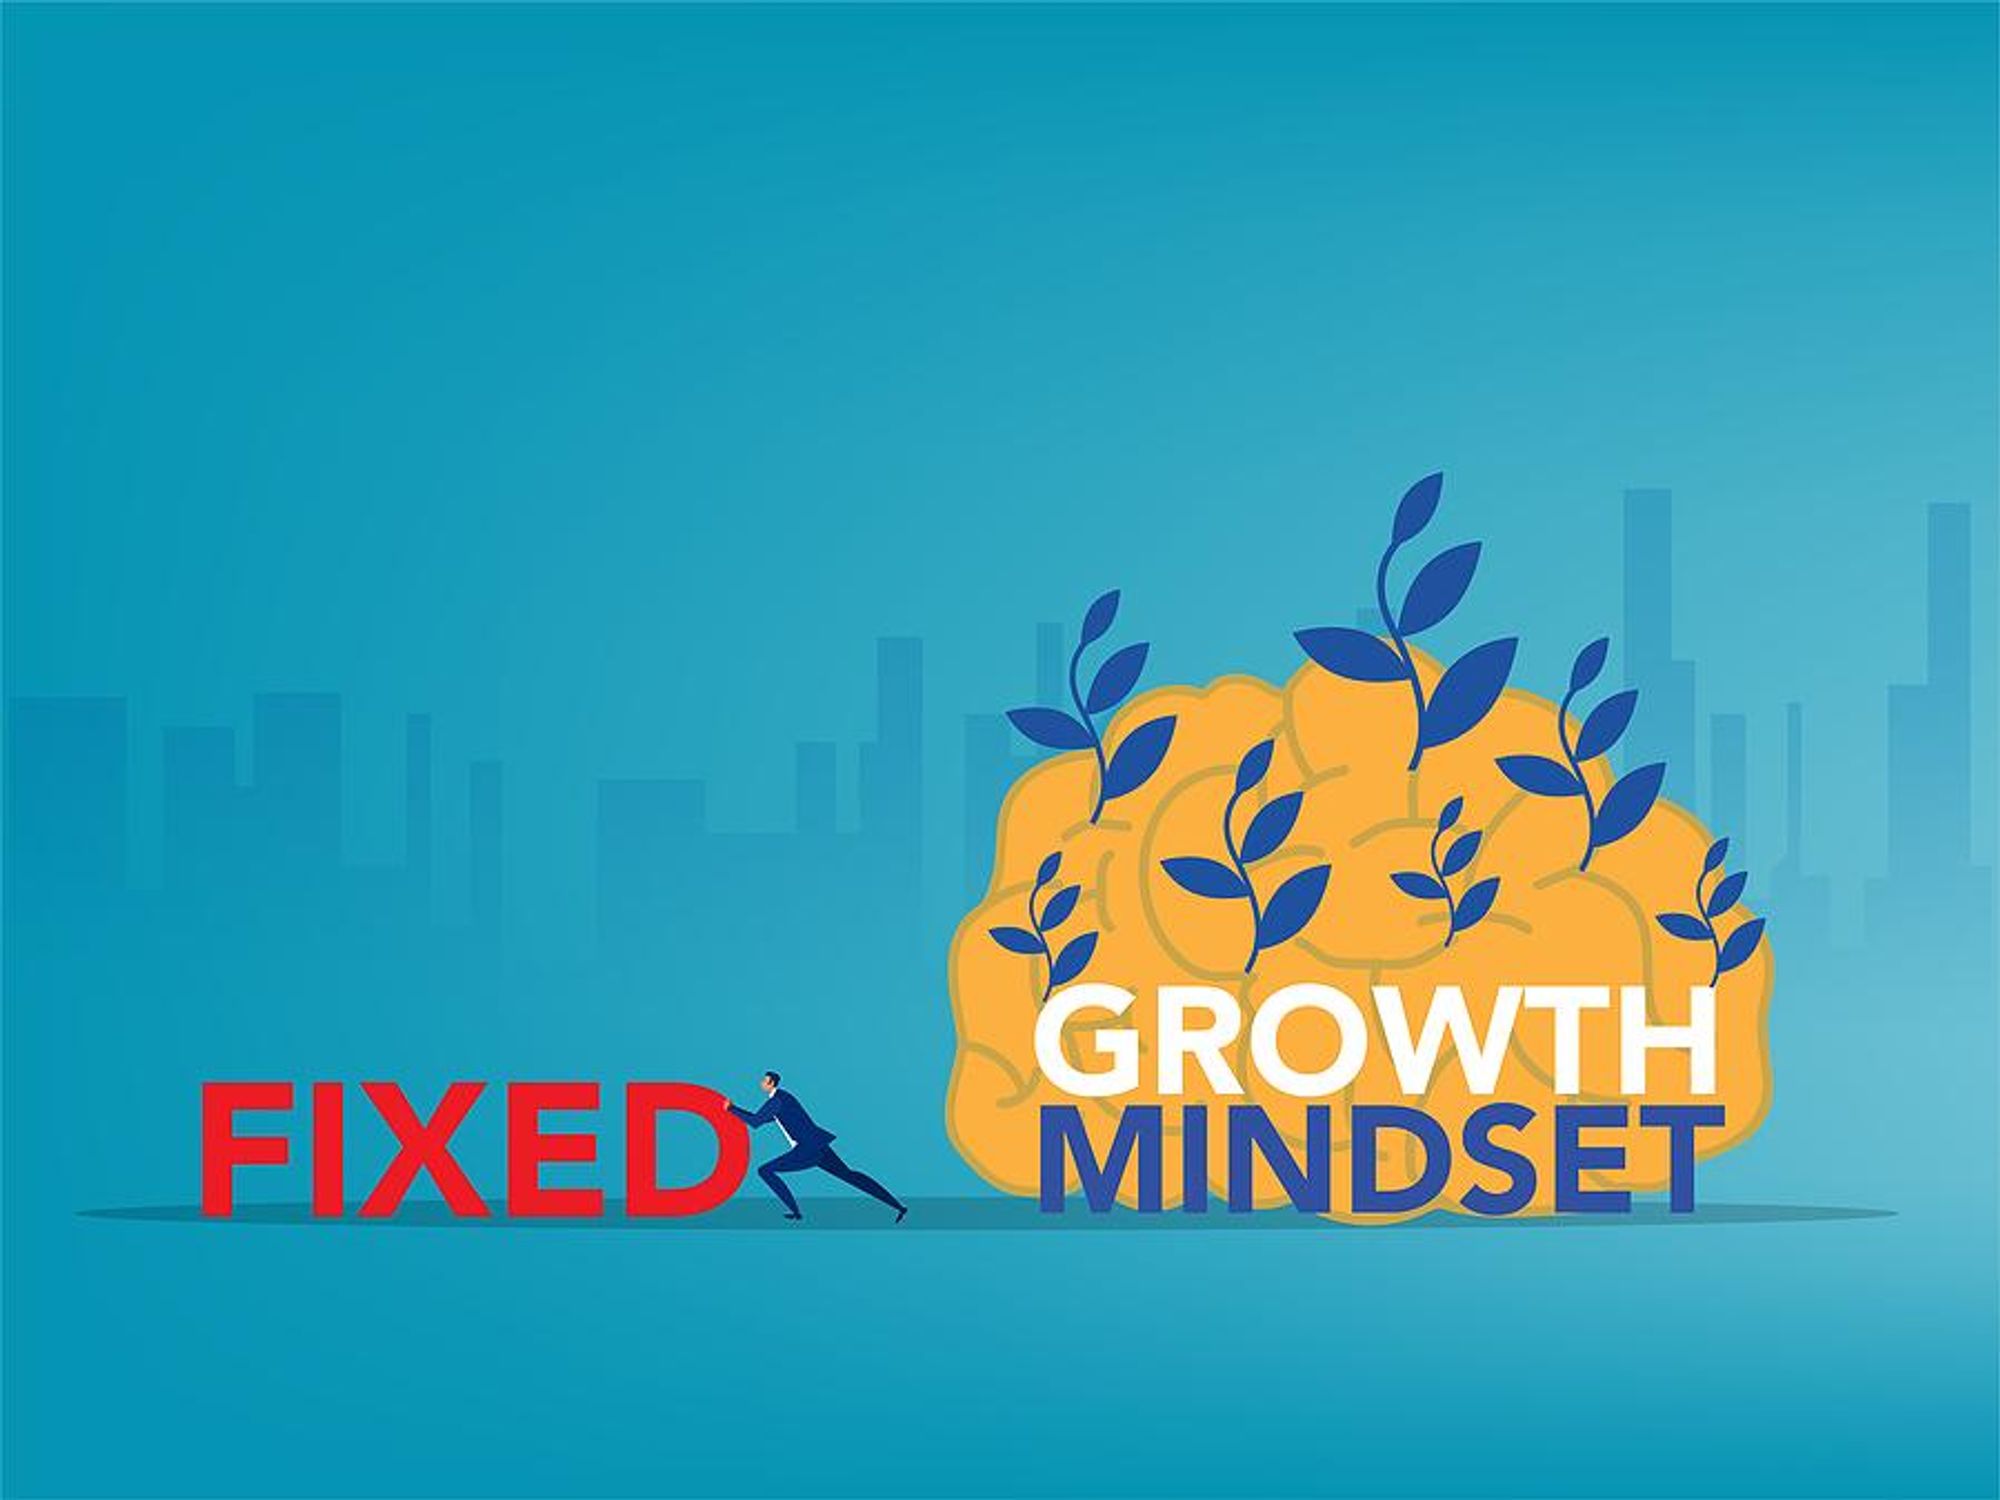 fixed mindset vs. growth mindset comparison concept